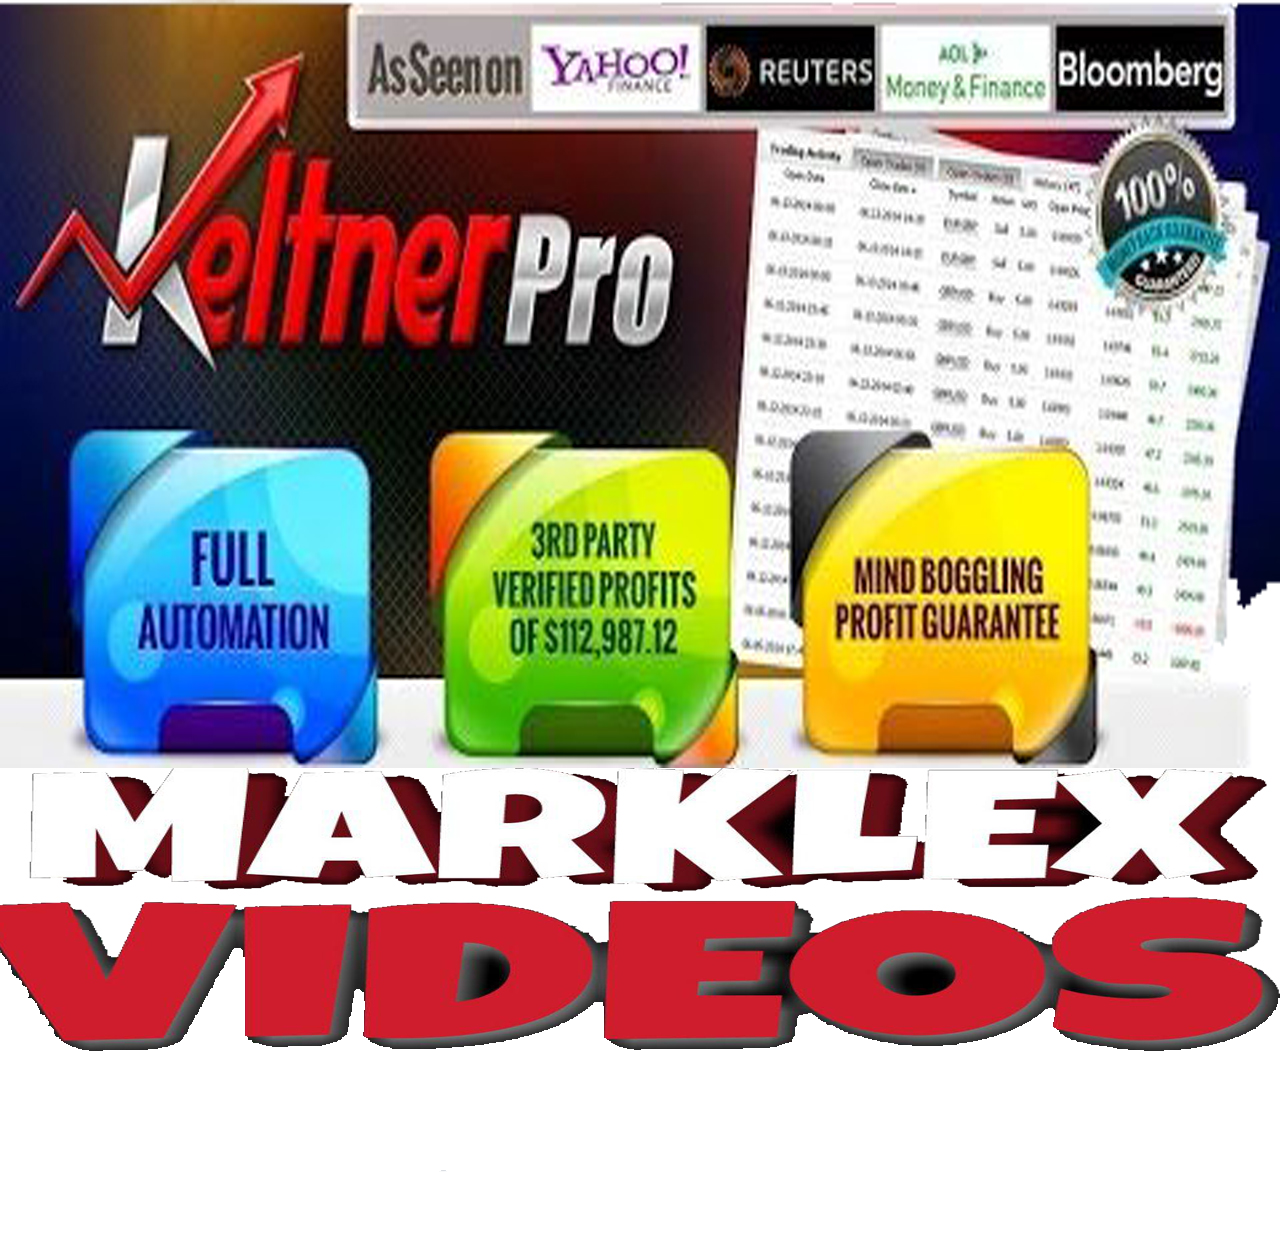 KeltnerPro forex EA Descargalo Gratis | MARKLEX TRADING